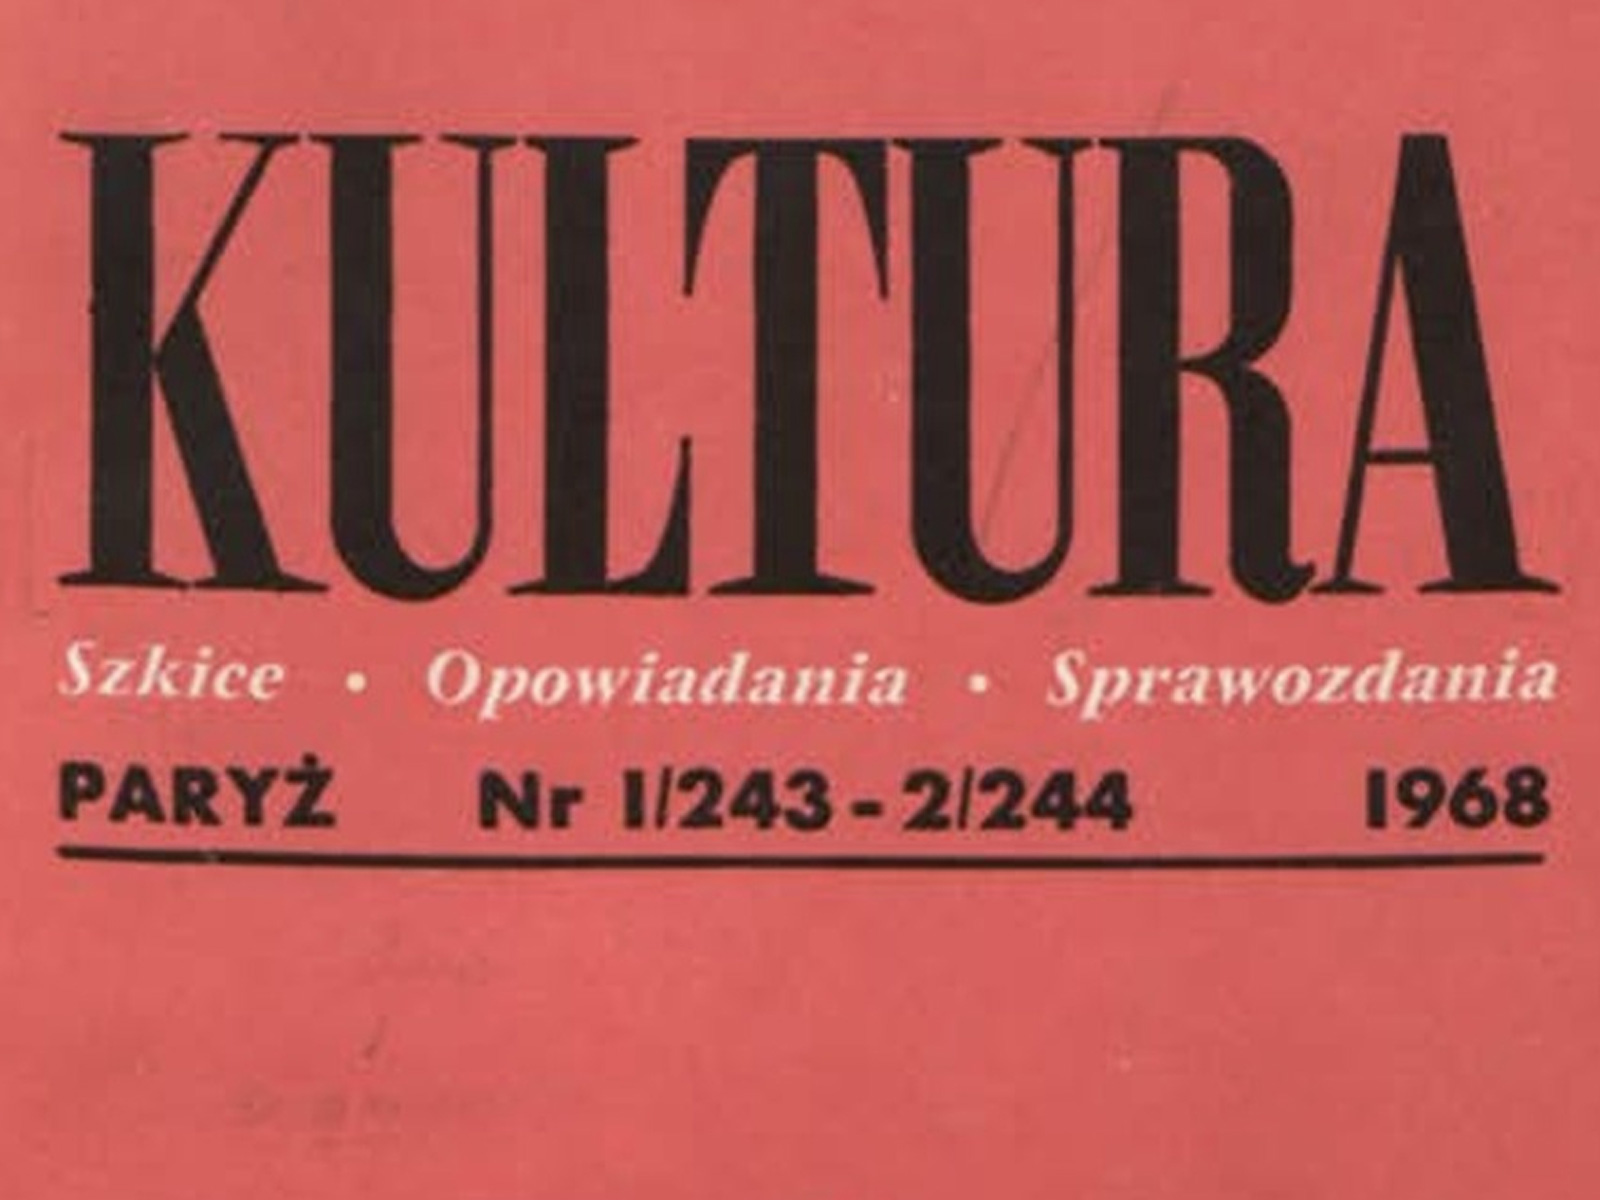 Witold-K, Kultura